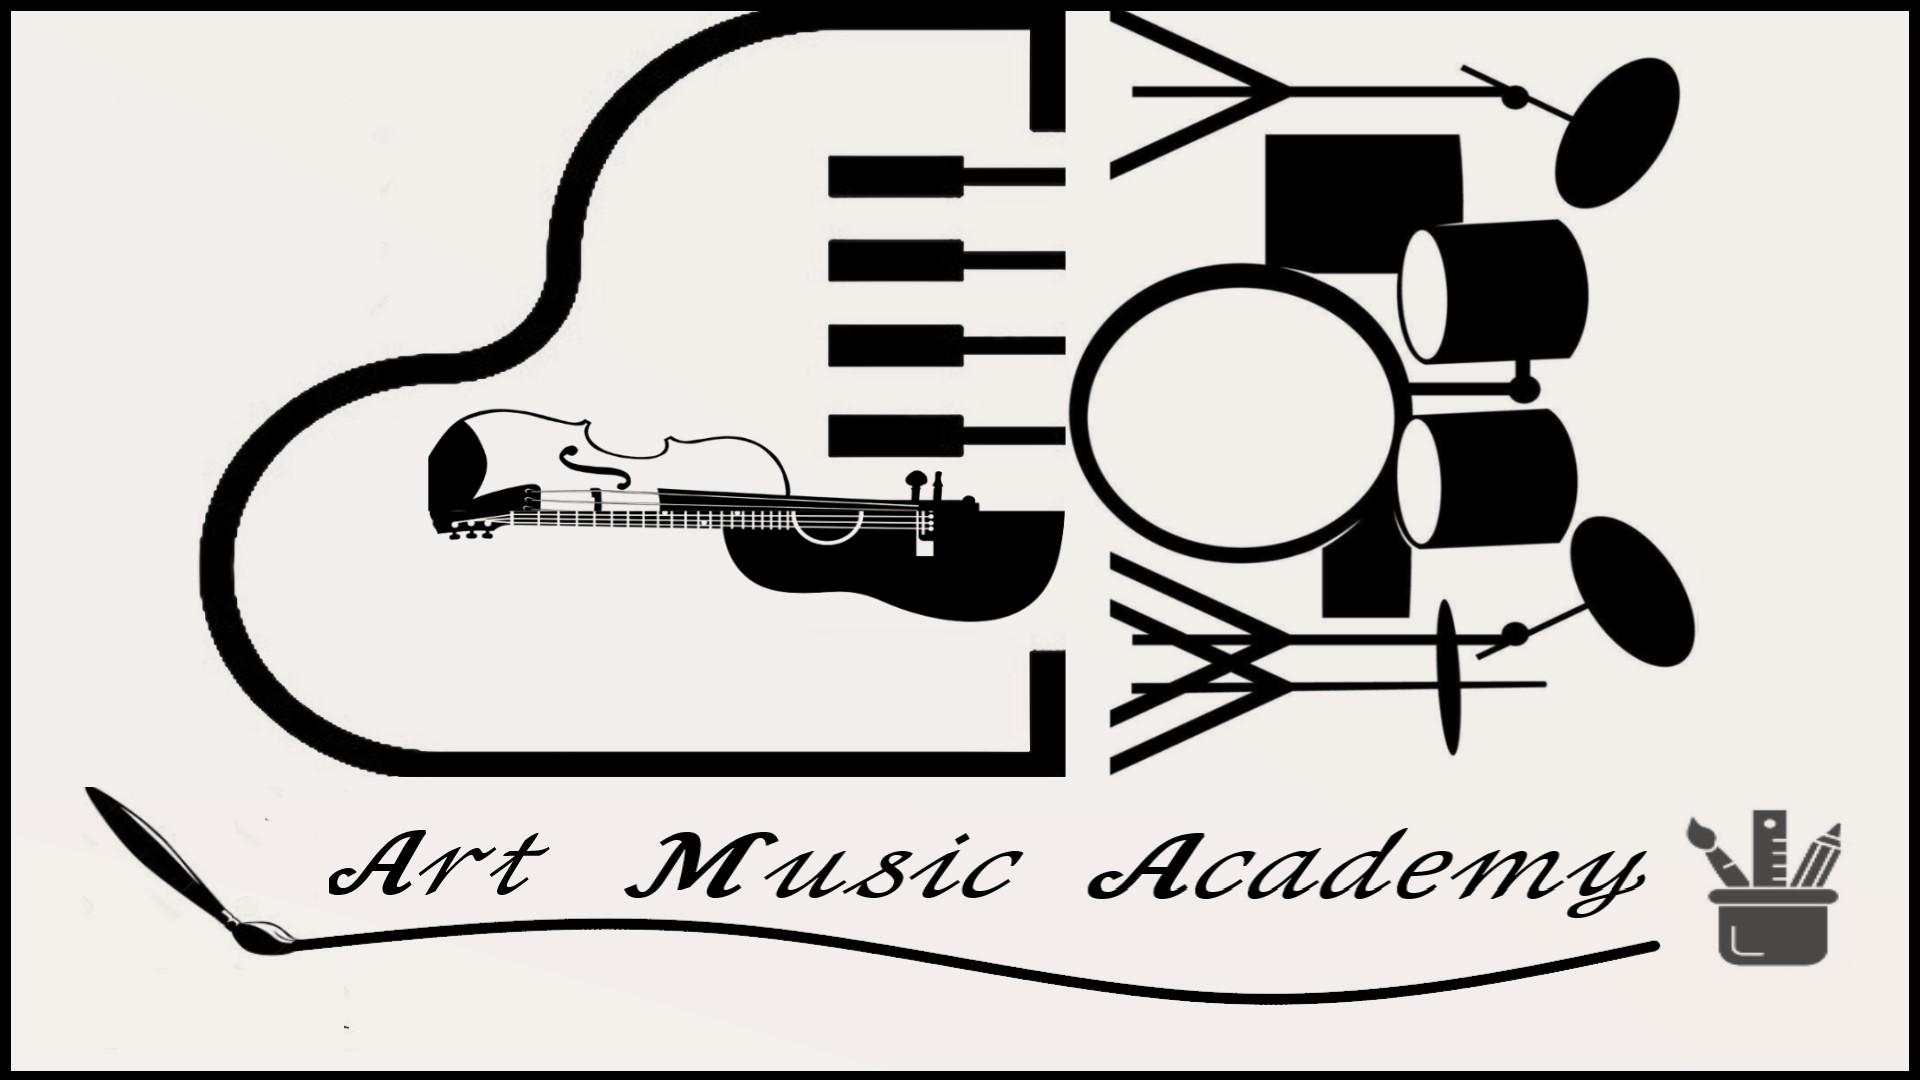 ArtMusicAcademy